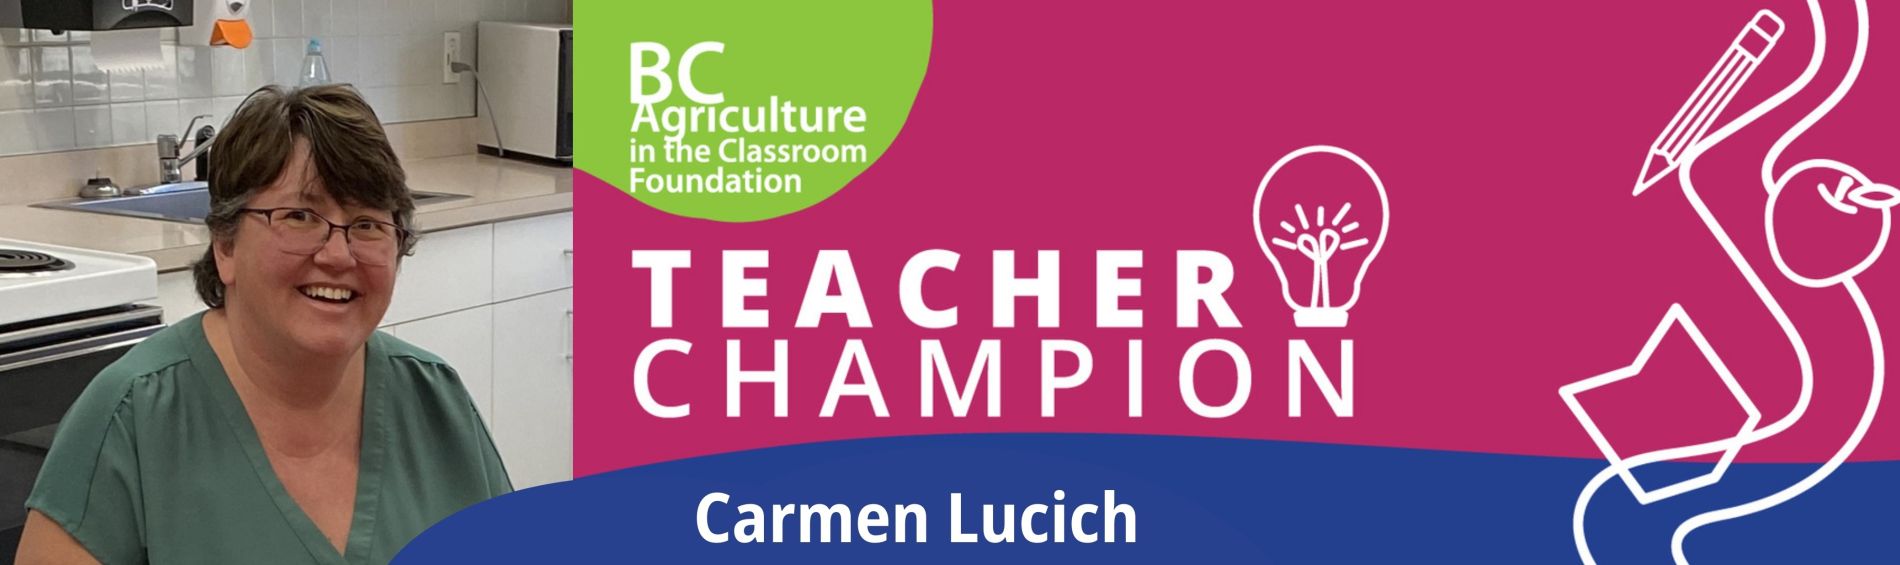 Teacher Champion - Carmen Lucich